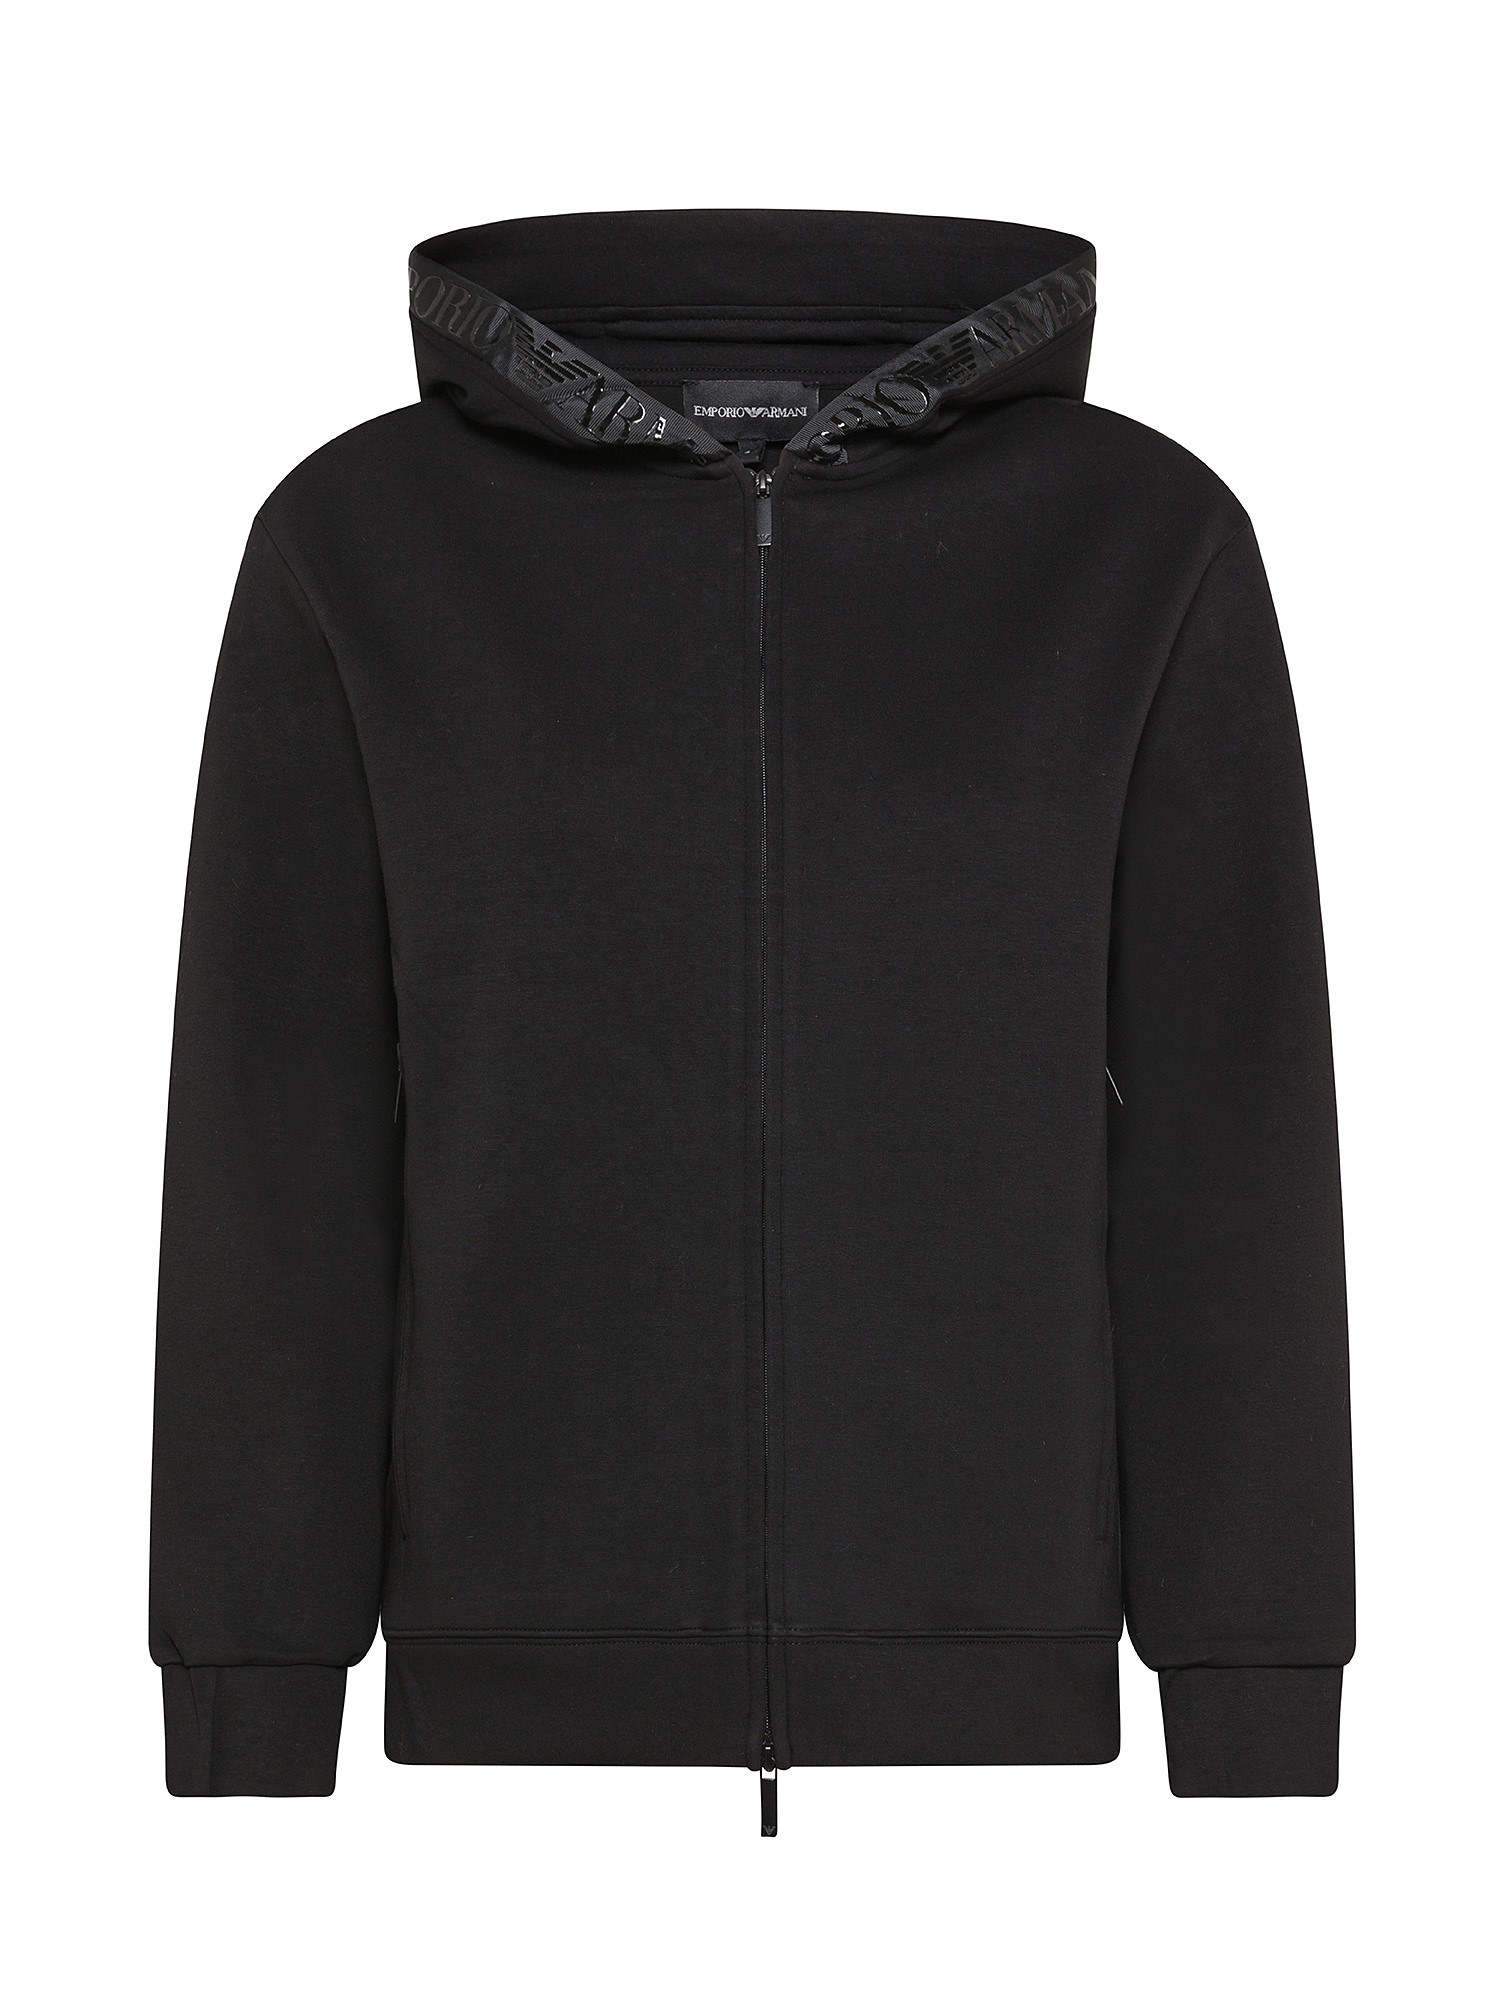 Emporio Armani - Full zip sweatshirt with hood and logo tape, Black, large image number 0